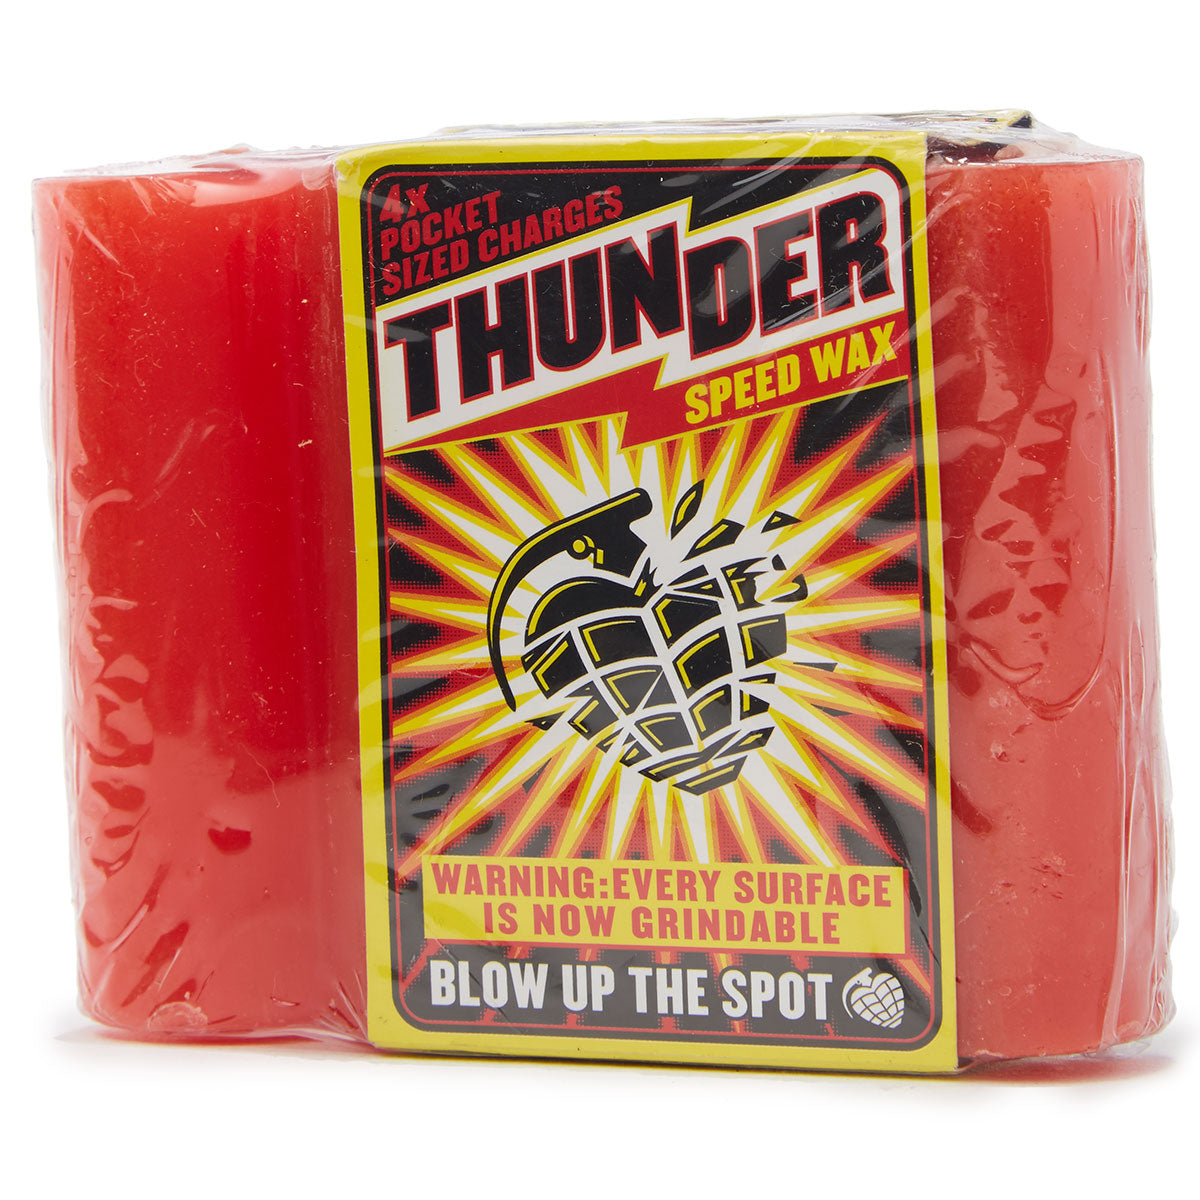 Thunder Speed Wax image 1